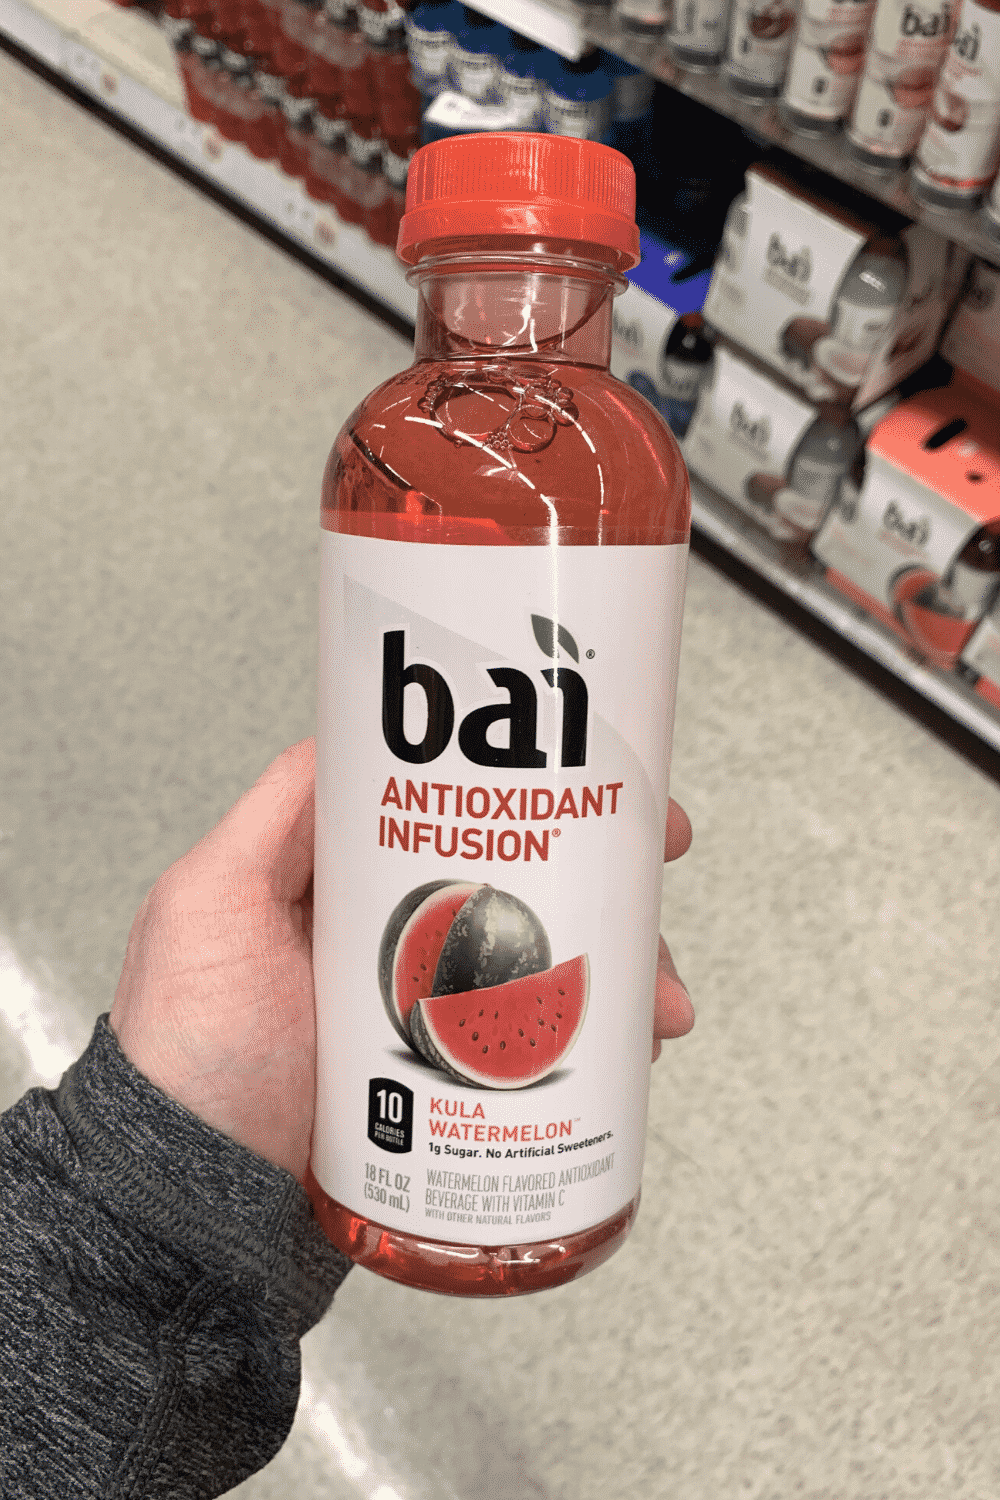 A hand holding a bottle of bai antioxidant infusion kula watermelon flavor.